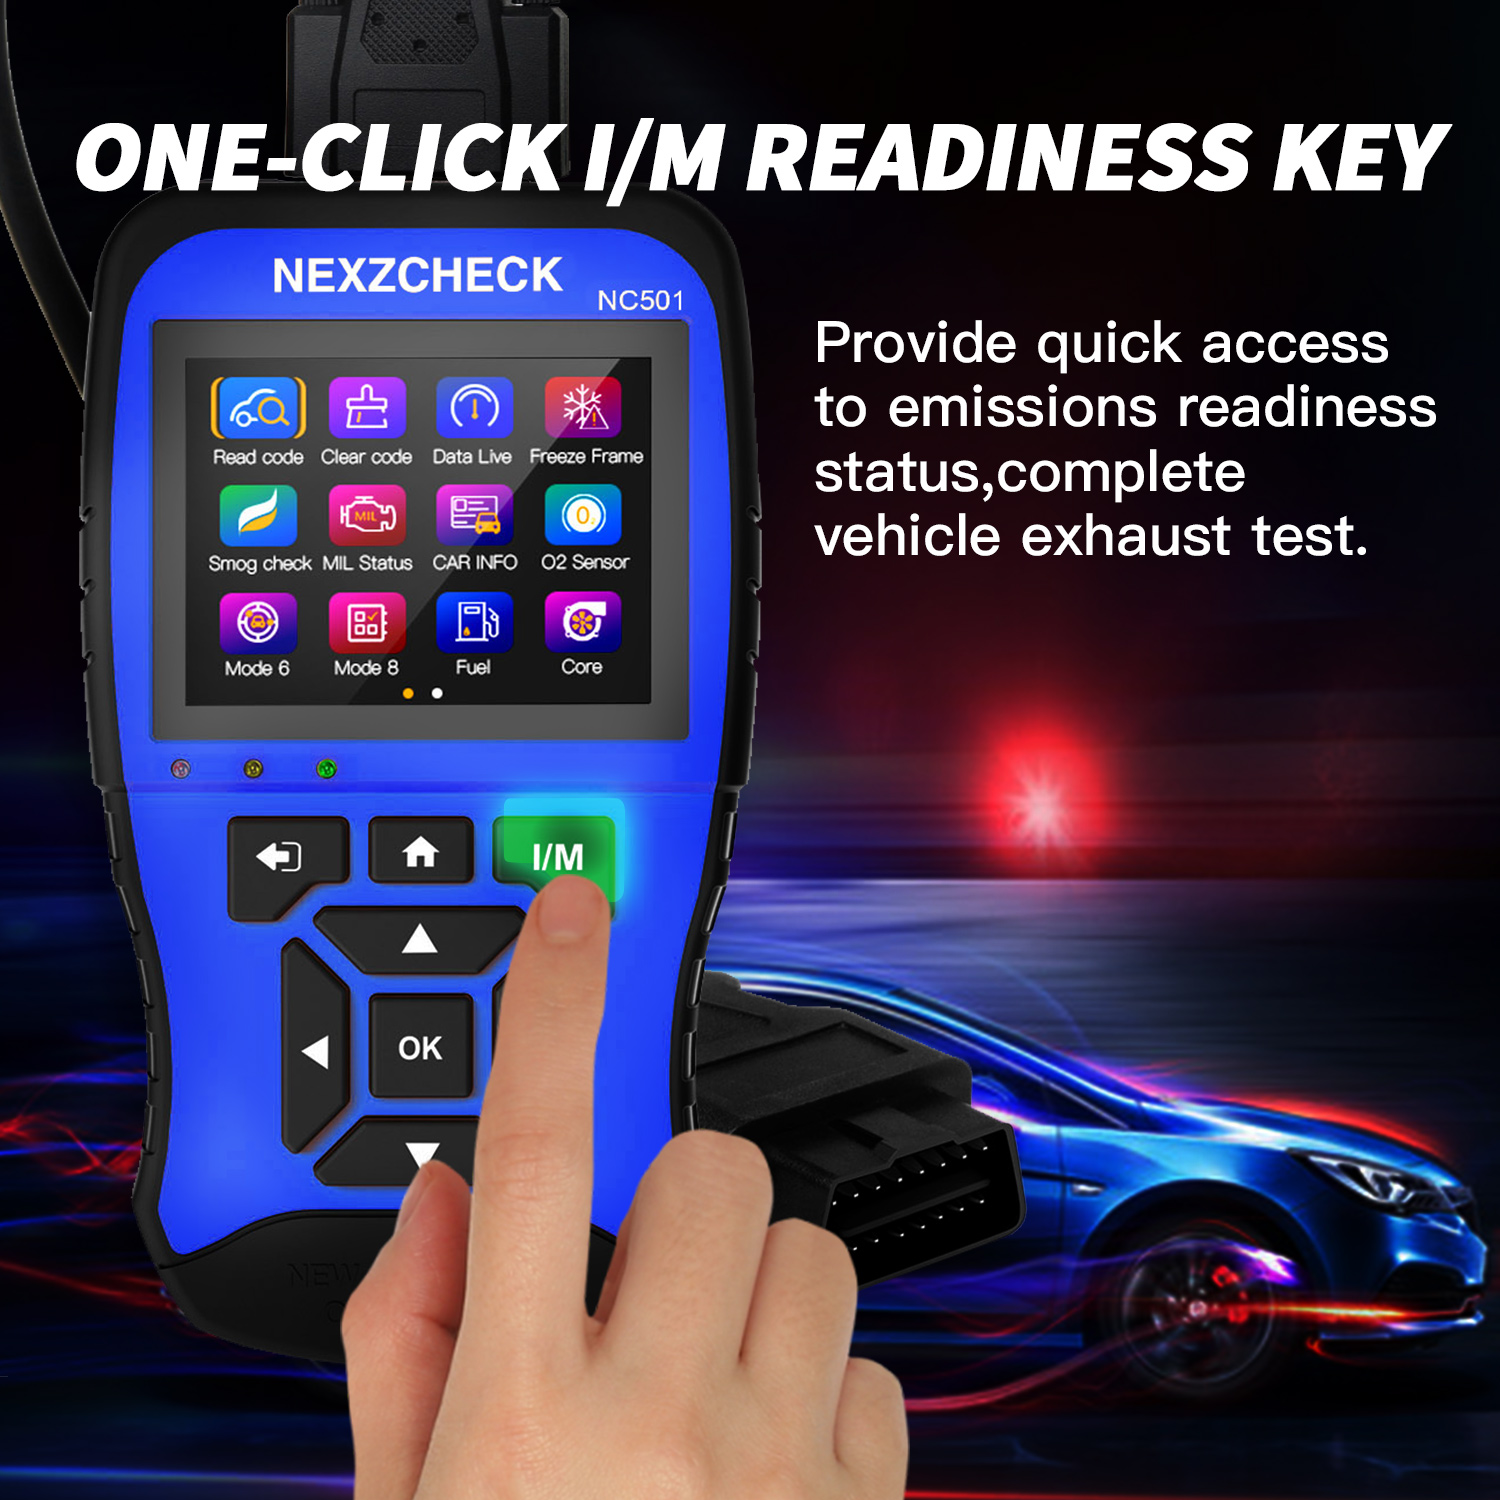 NexzCheck NC501 One-Click I/M Readiness Key